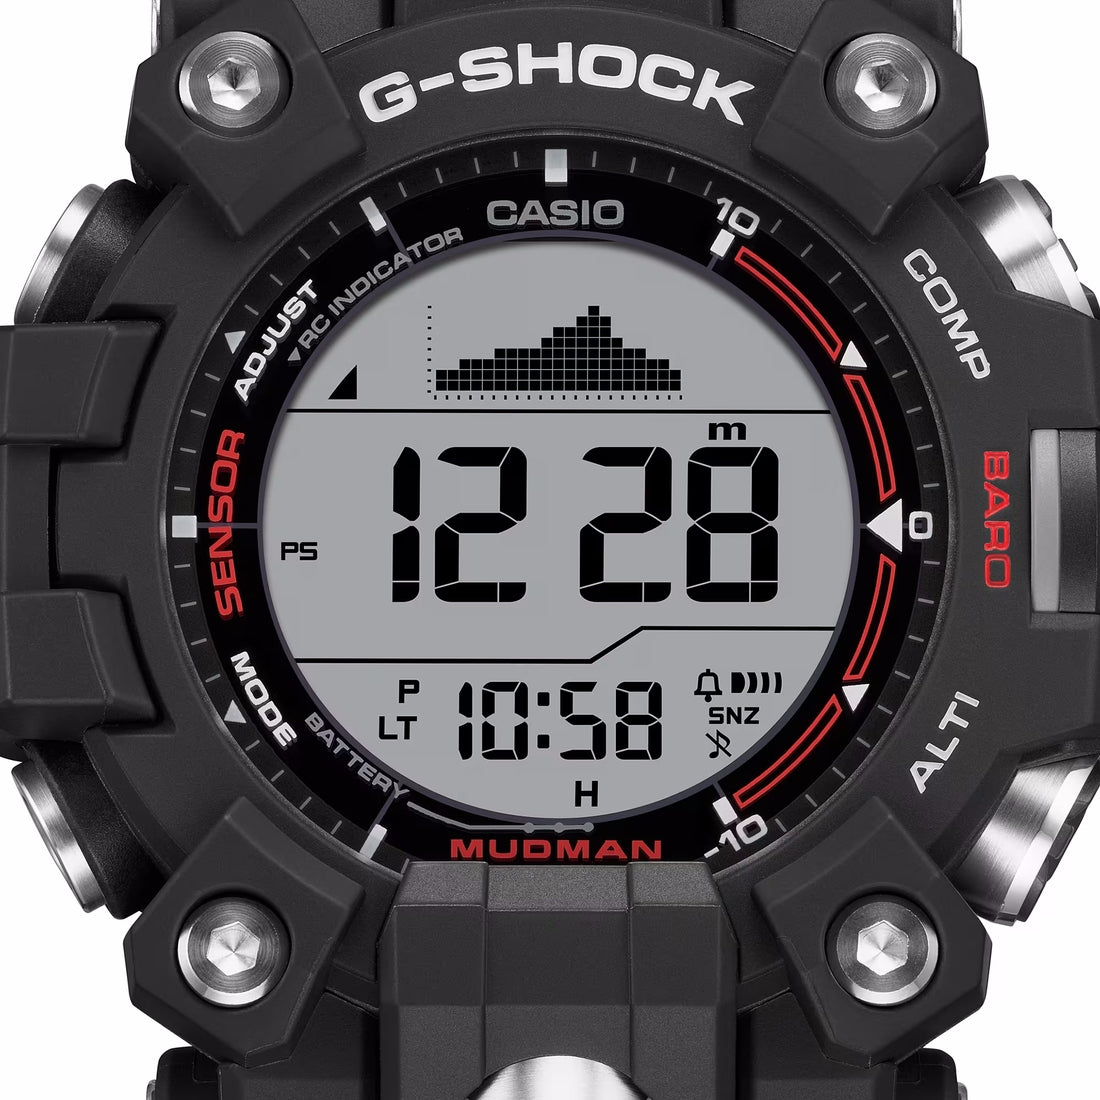 Orologio G-Shock GW-9500-1ER Mudman resina biologica nera